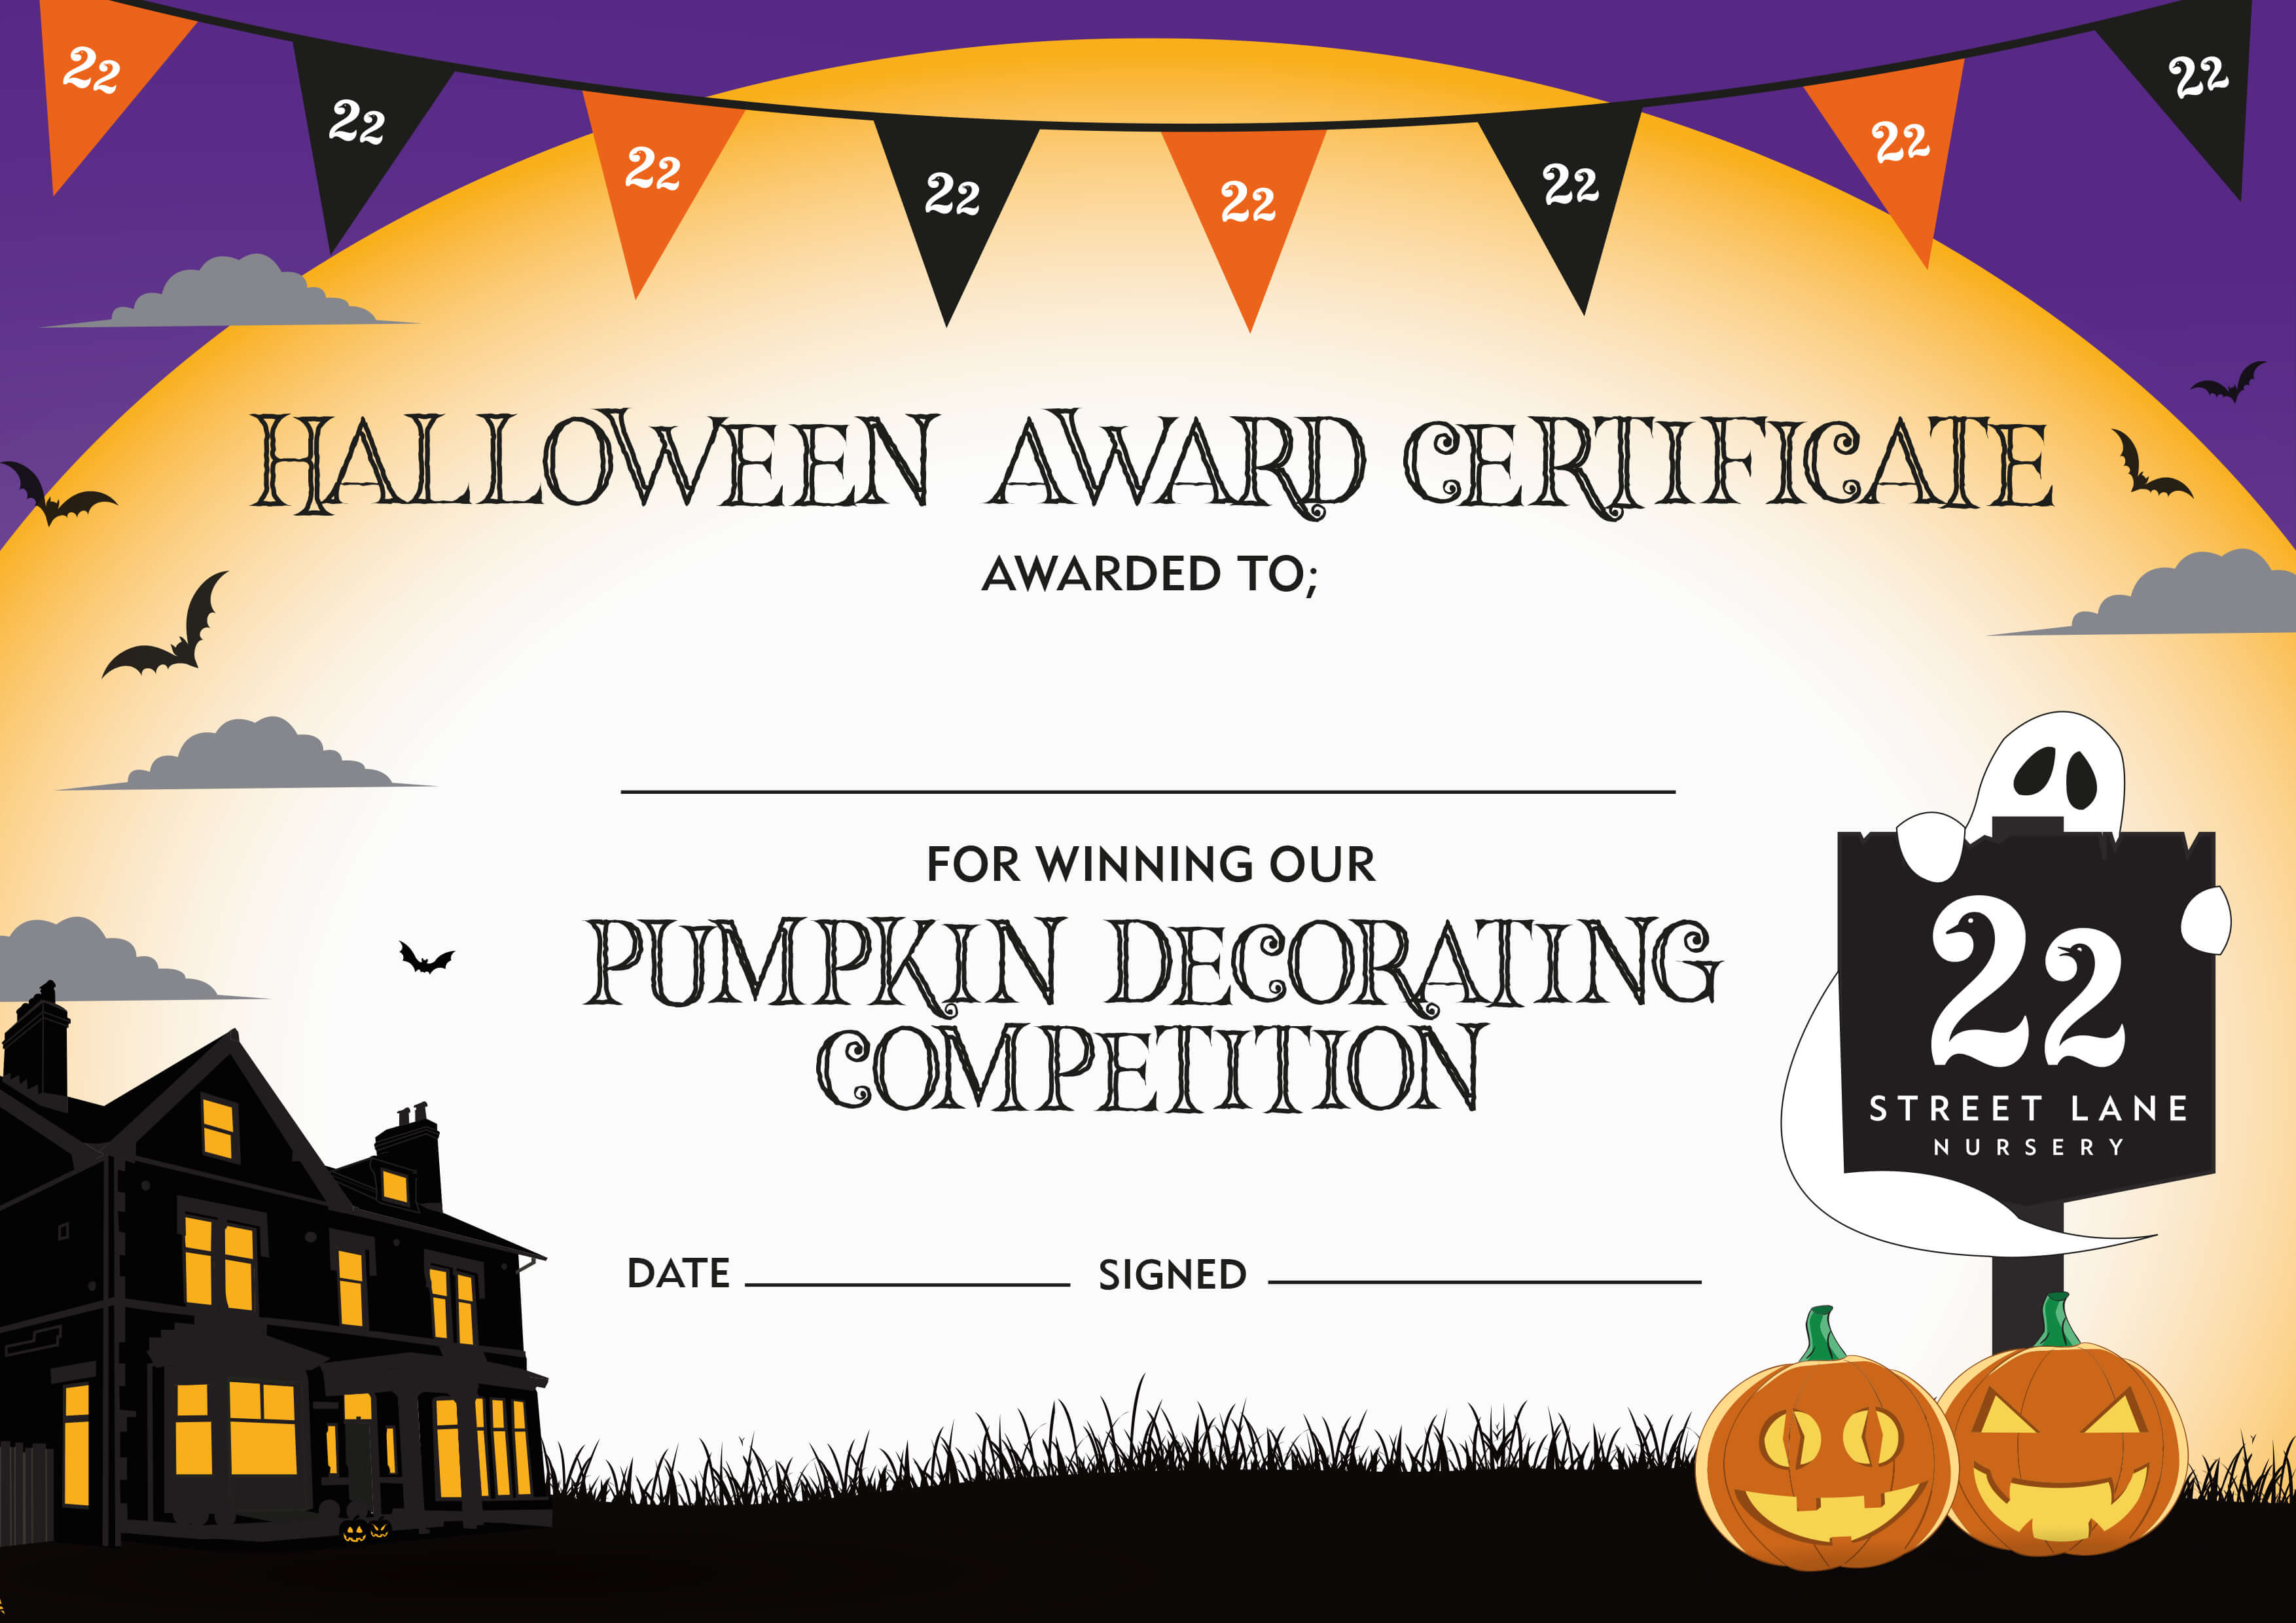 Halloween Pumpkin Decorating Competition Certificate For Halloween Certificate Template